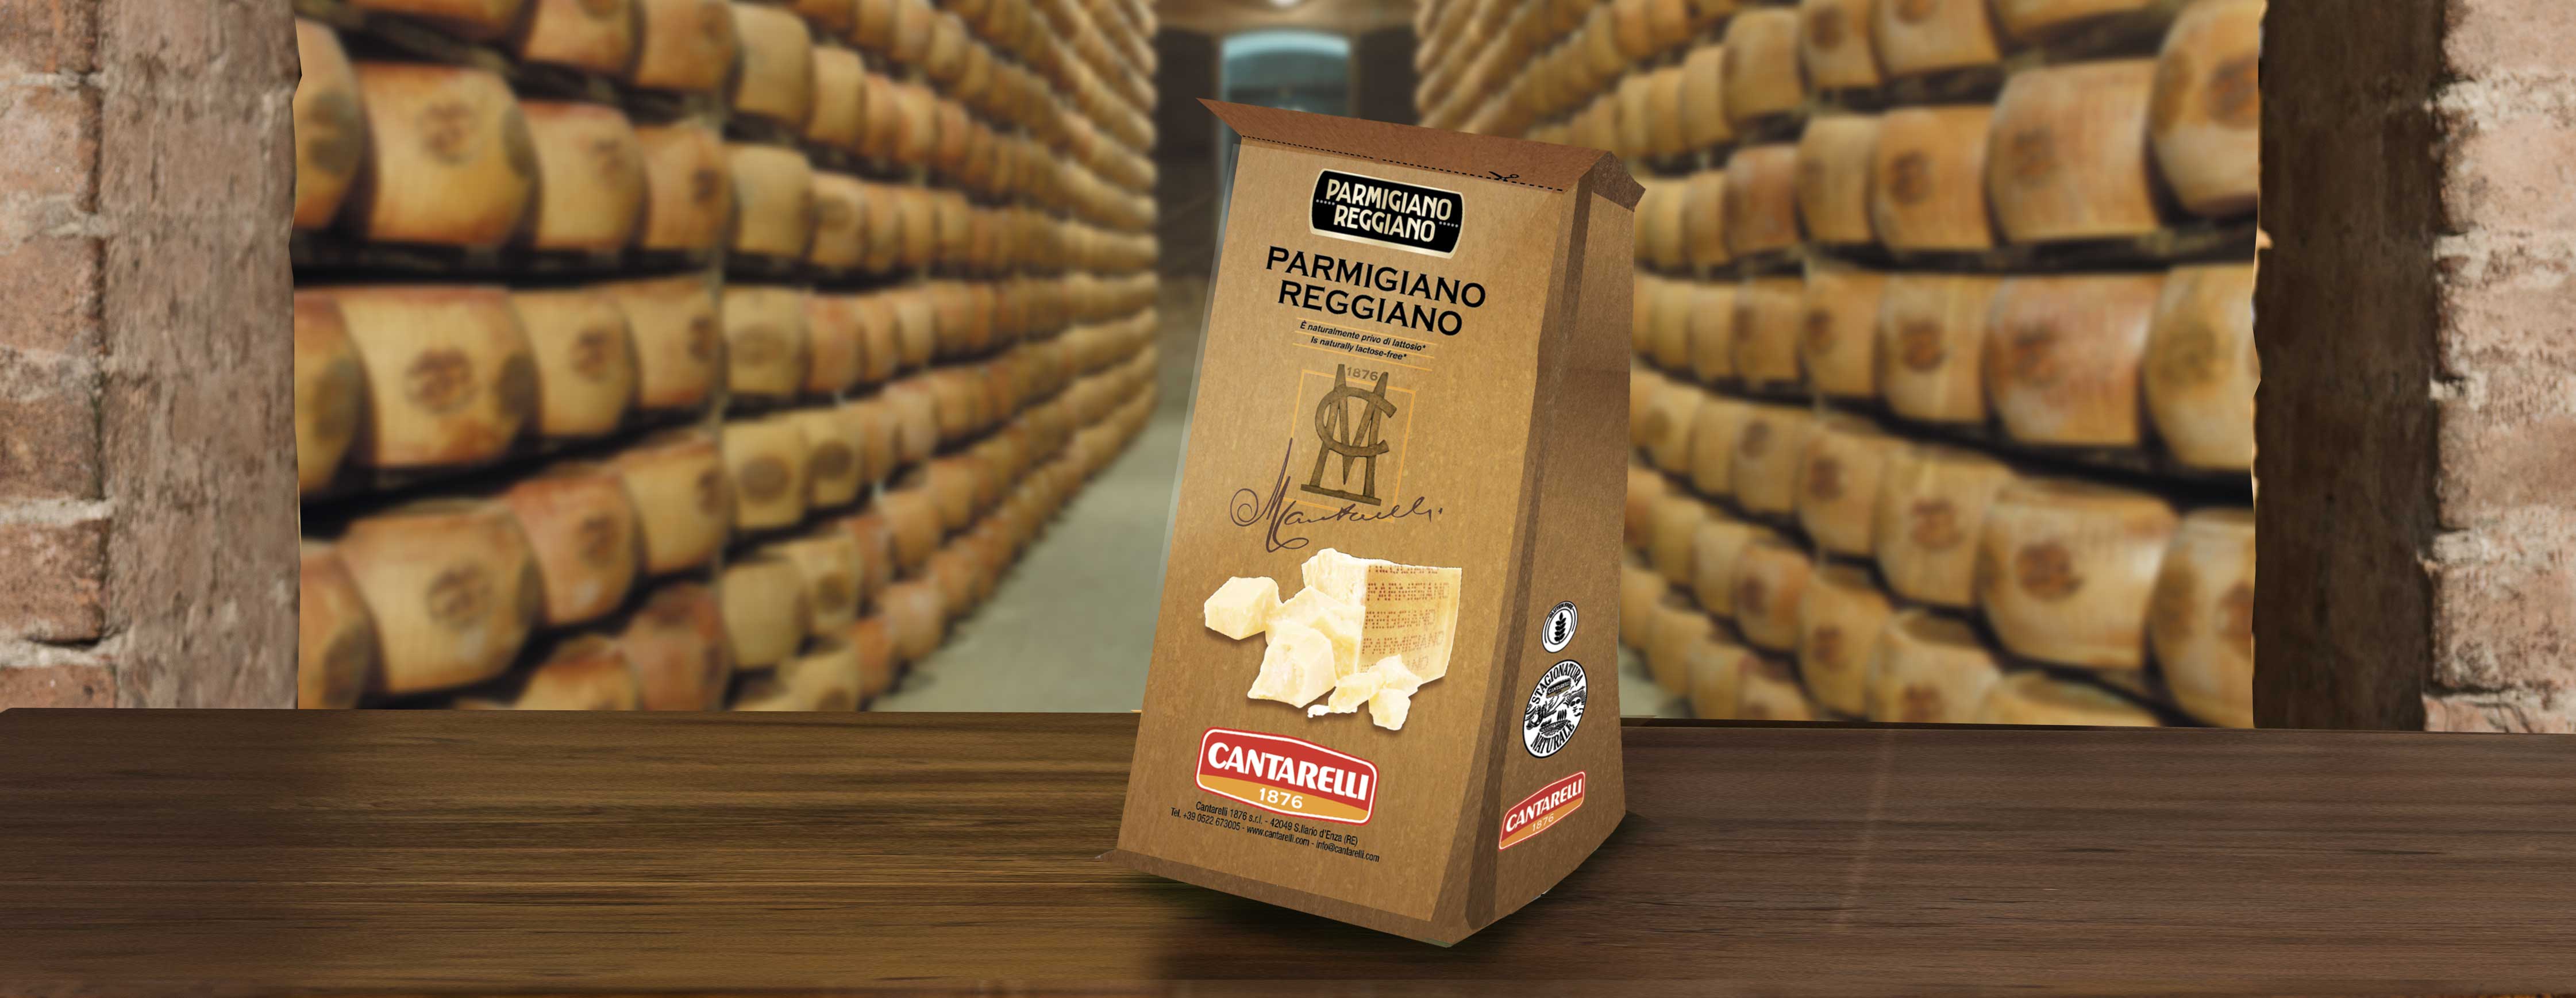 Cantarelli_packaging